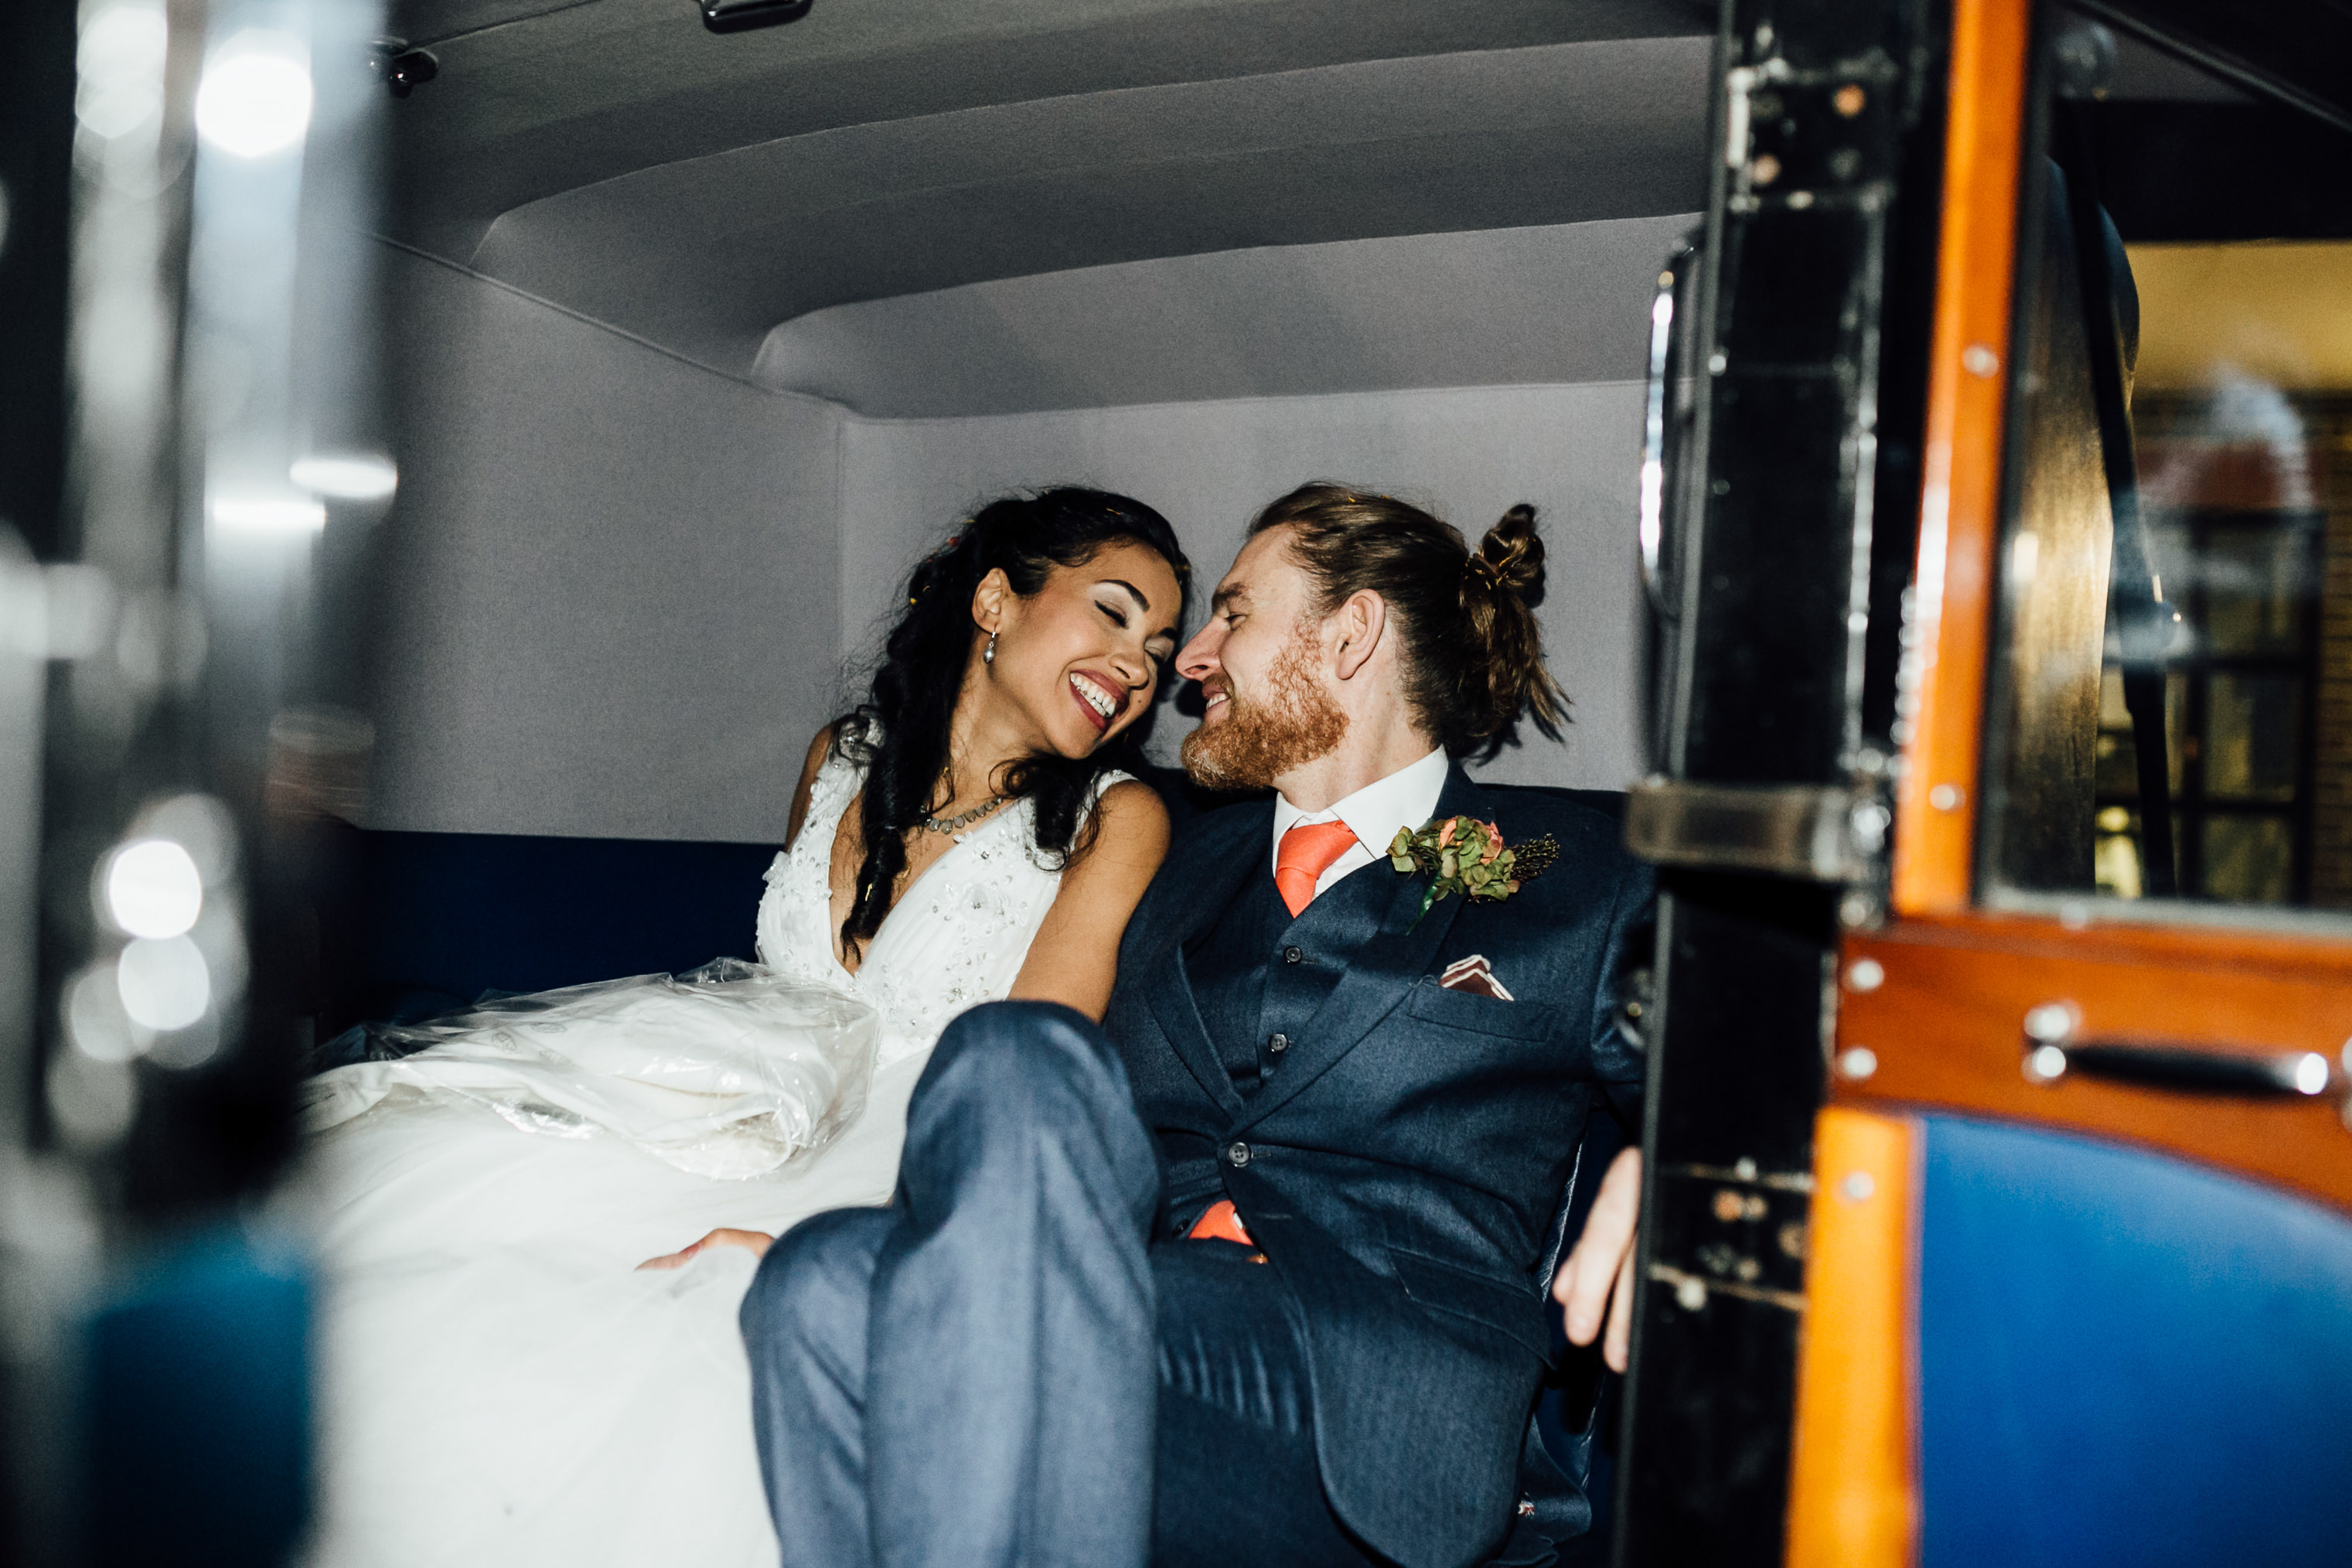 quirky fun autumn wedding in london wedding photographer documentary style